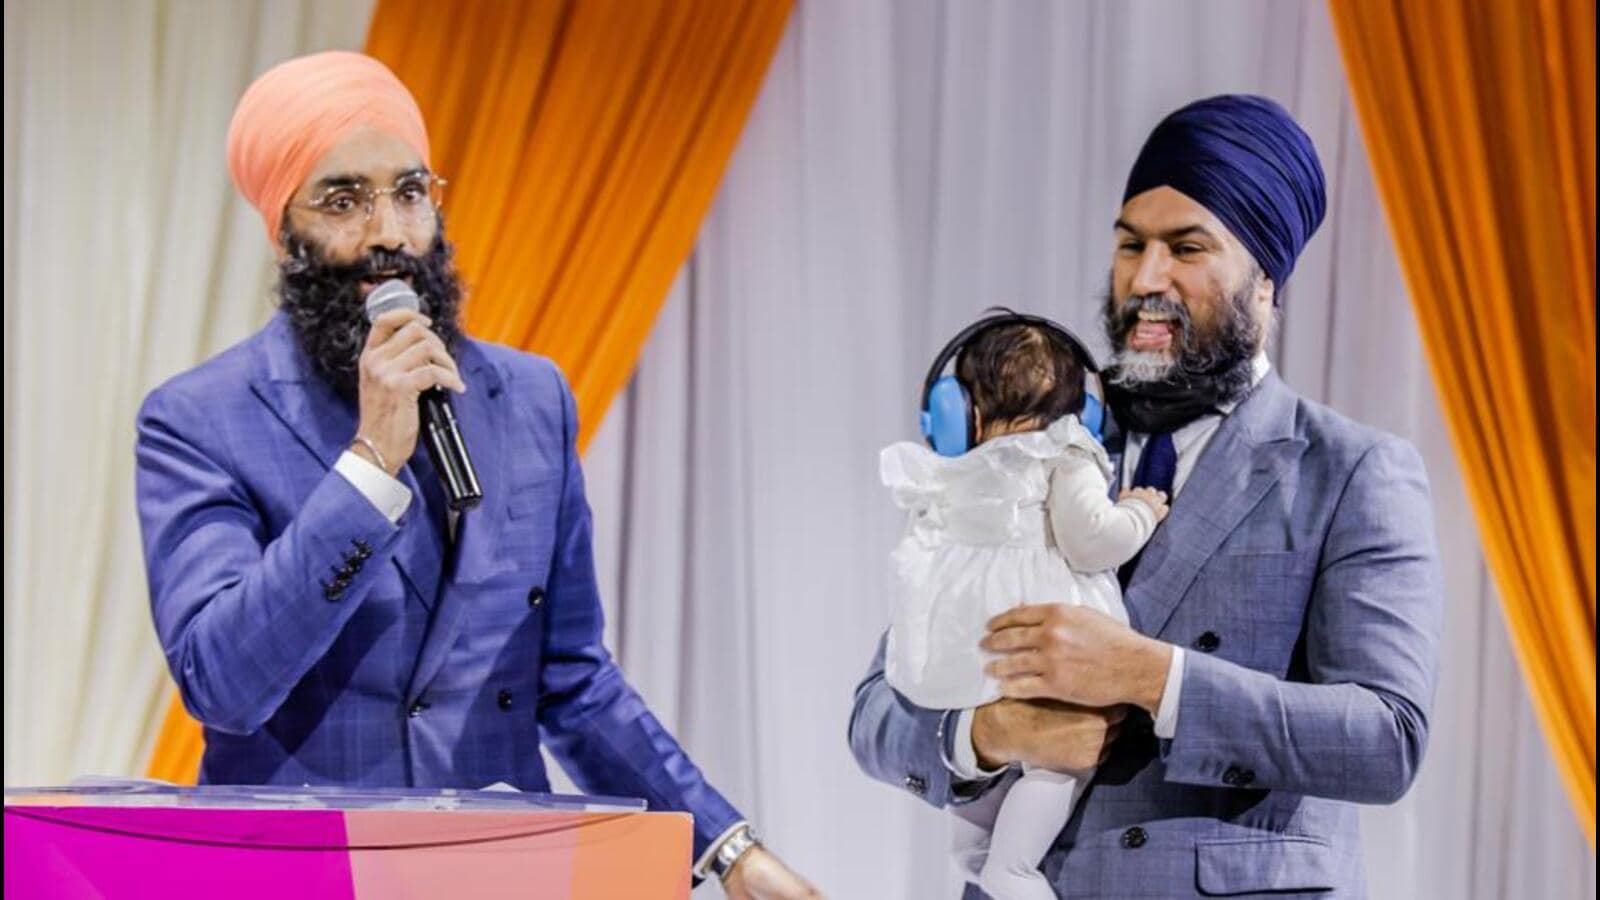 Canada’s NDP leader Jagmeet Singh faces political setback